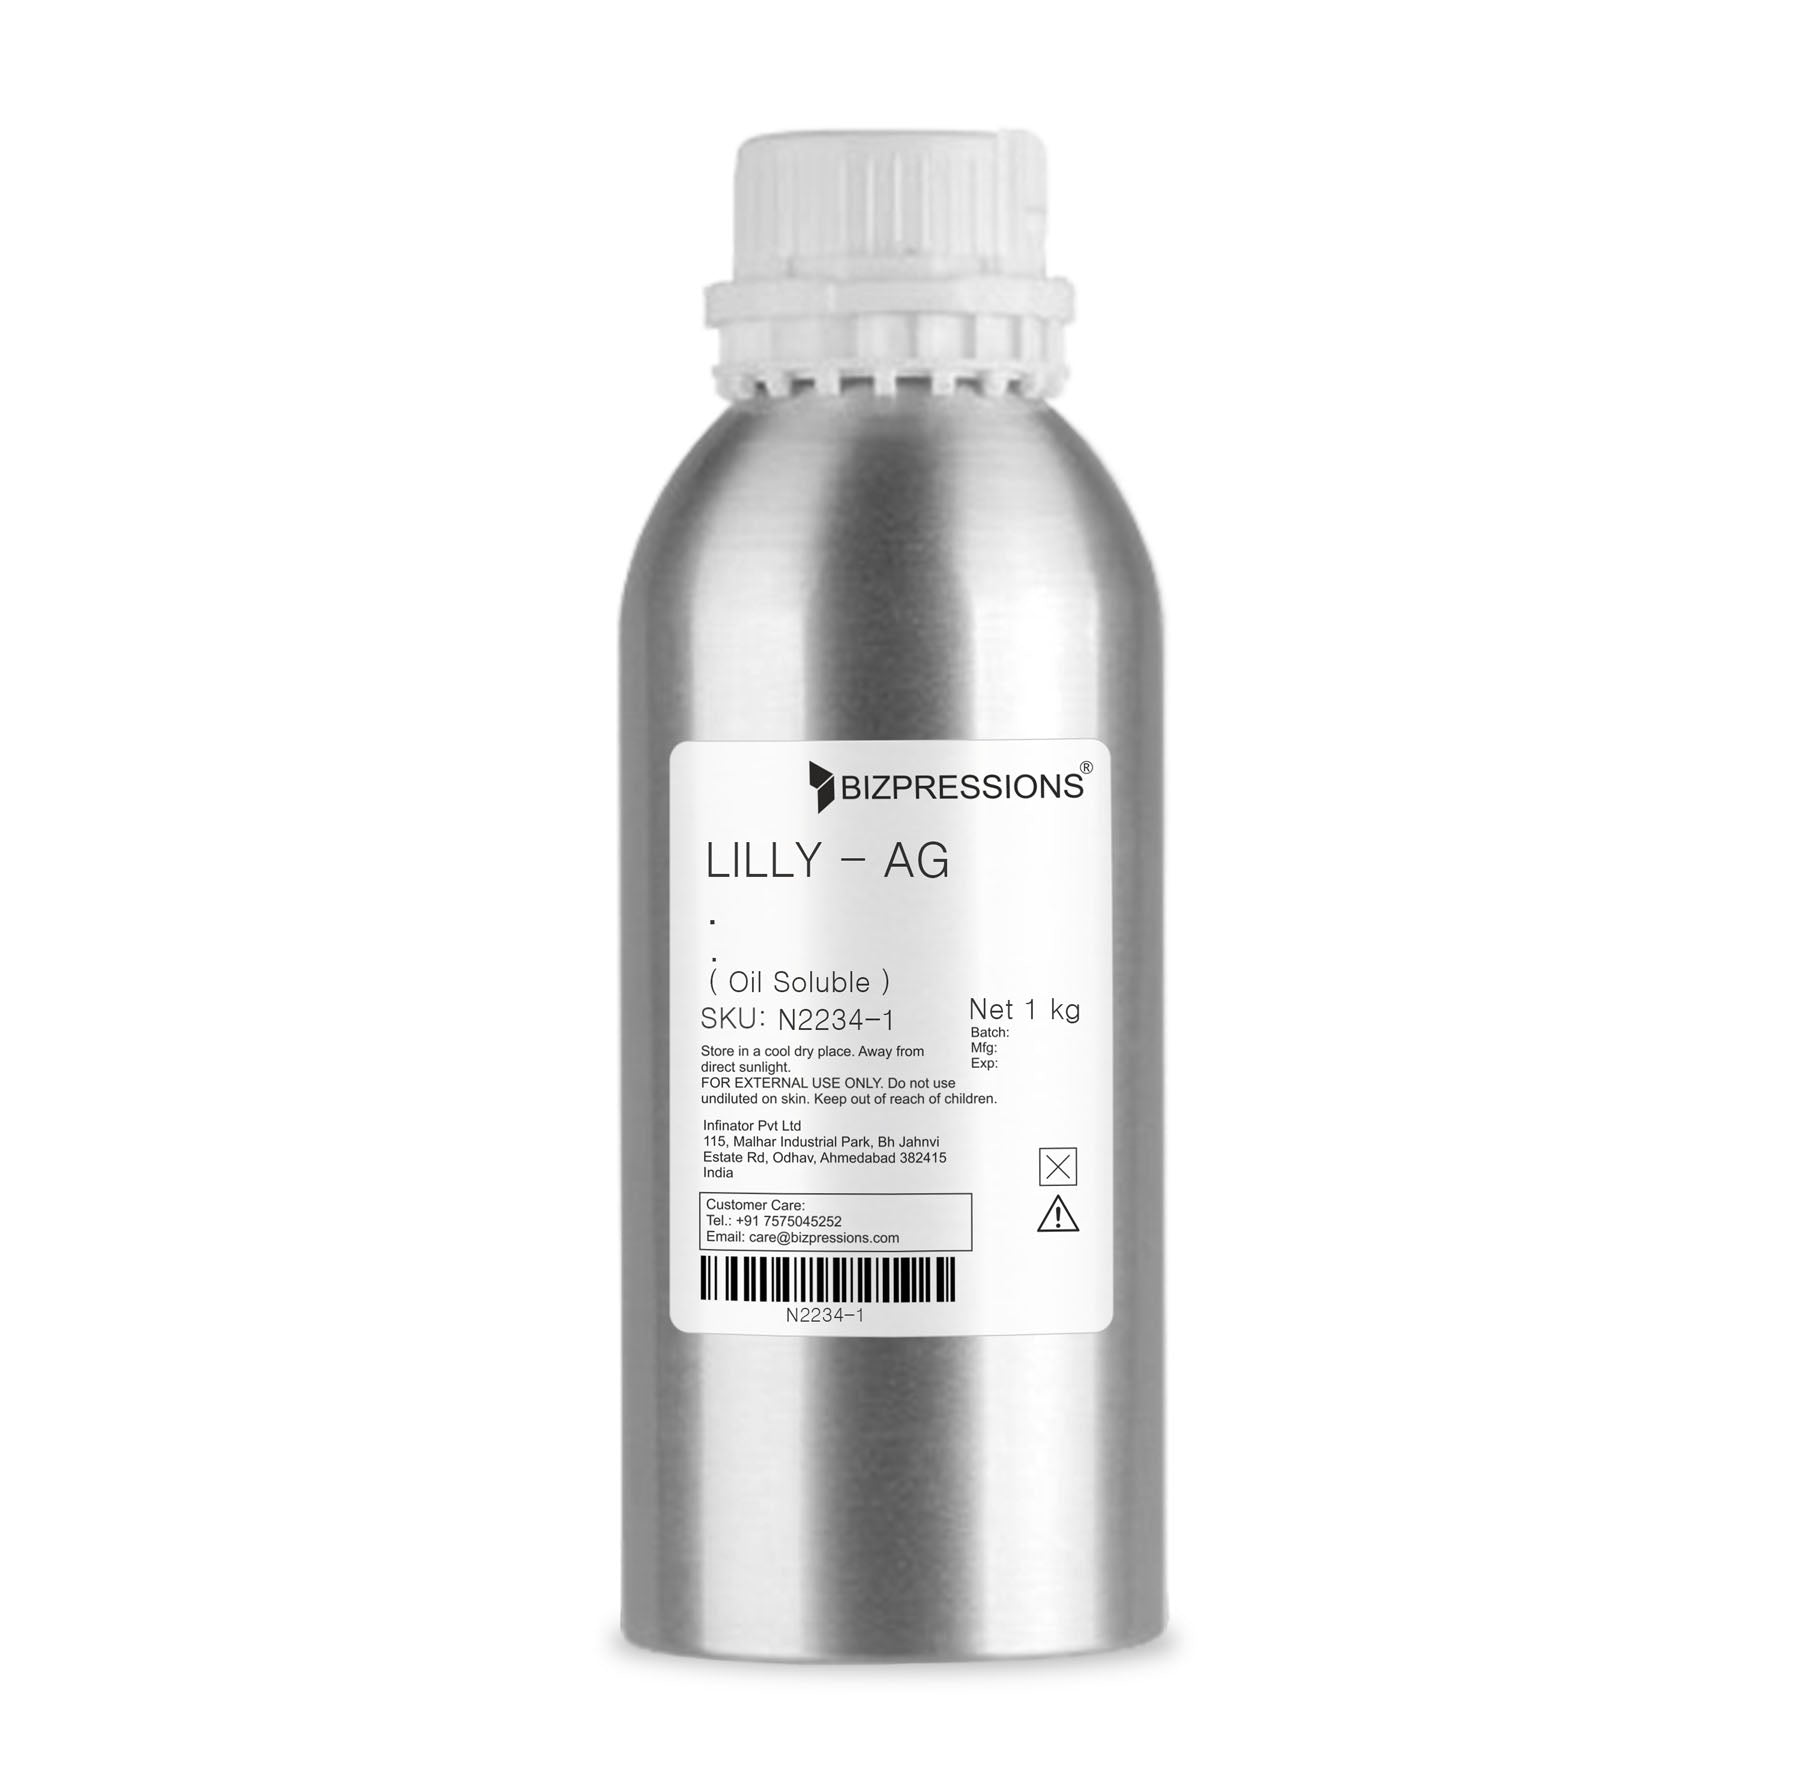 LILLY - AG - Fragrance ( Oil Soluble ) - 1 kg